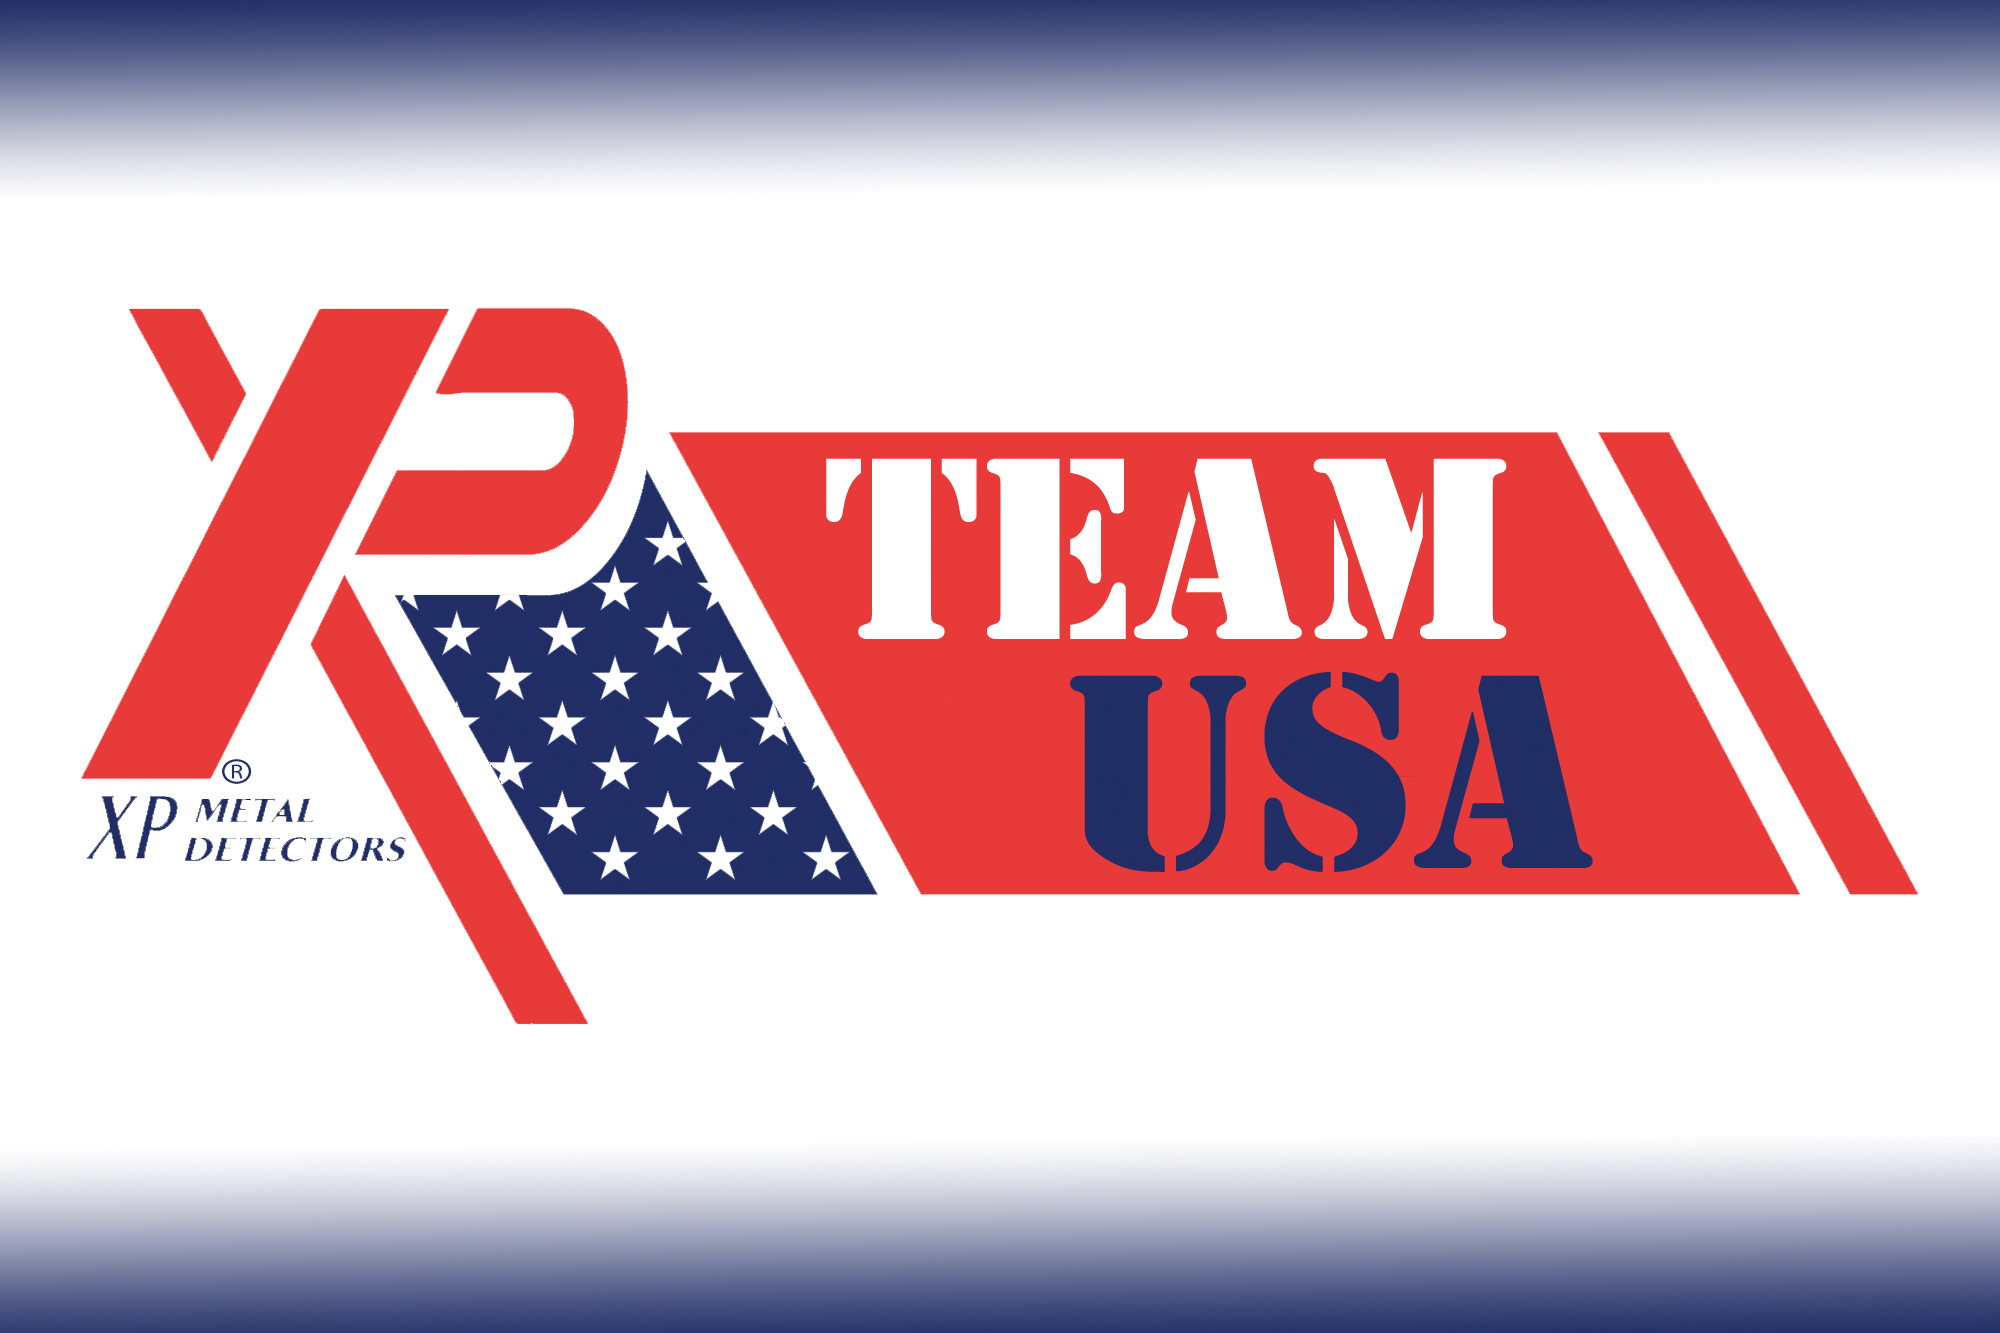 XP Team USA